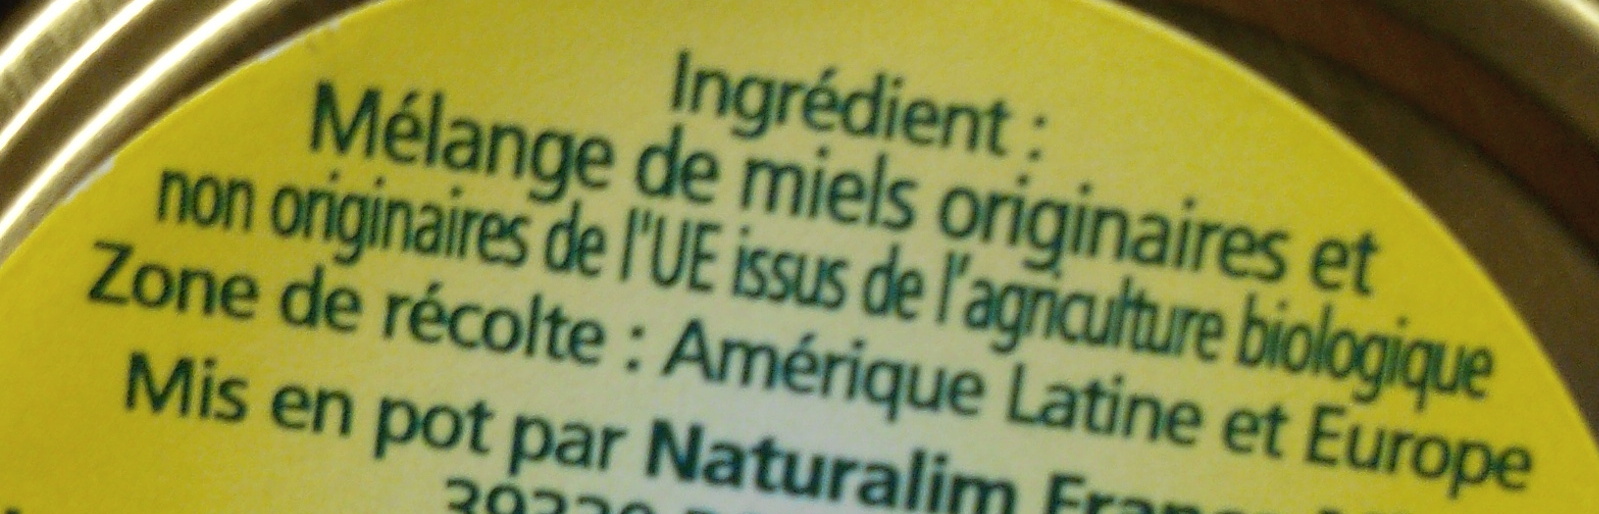 Miel bio - Ingredients - fr